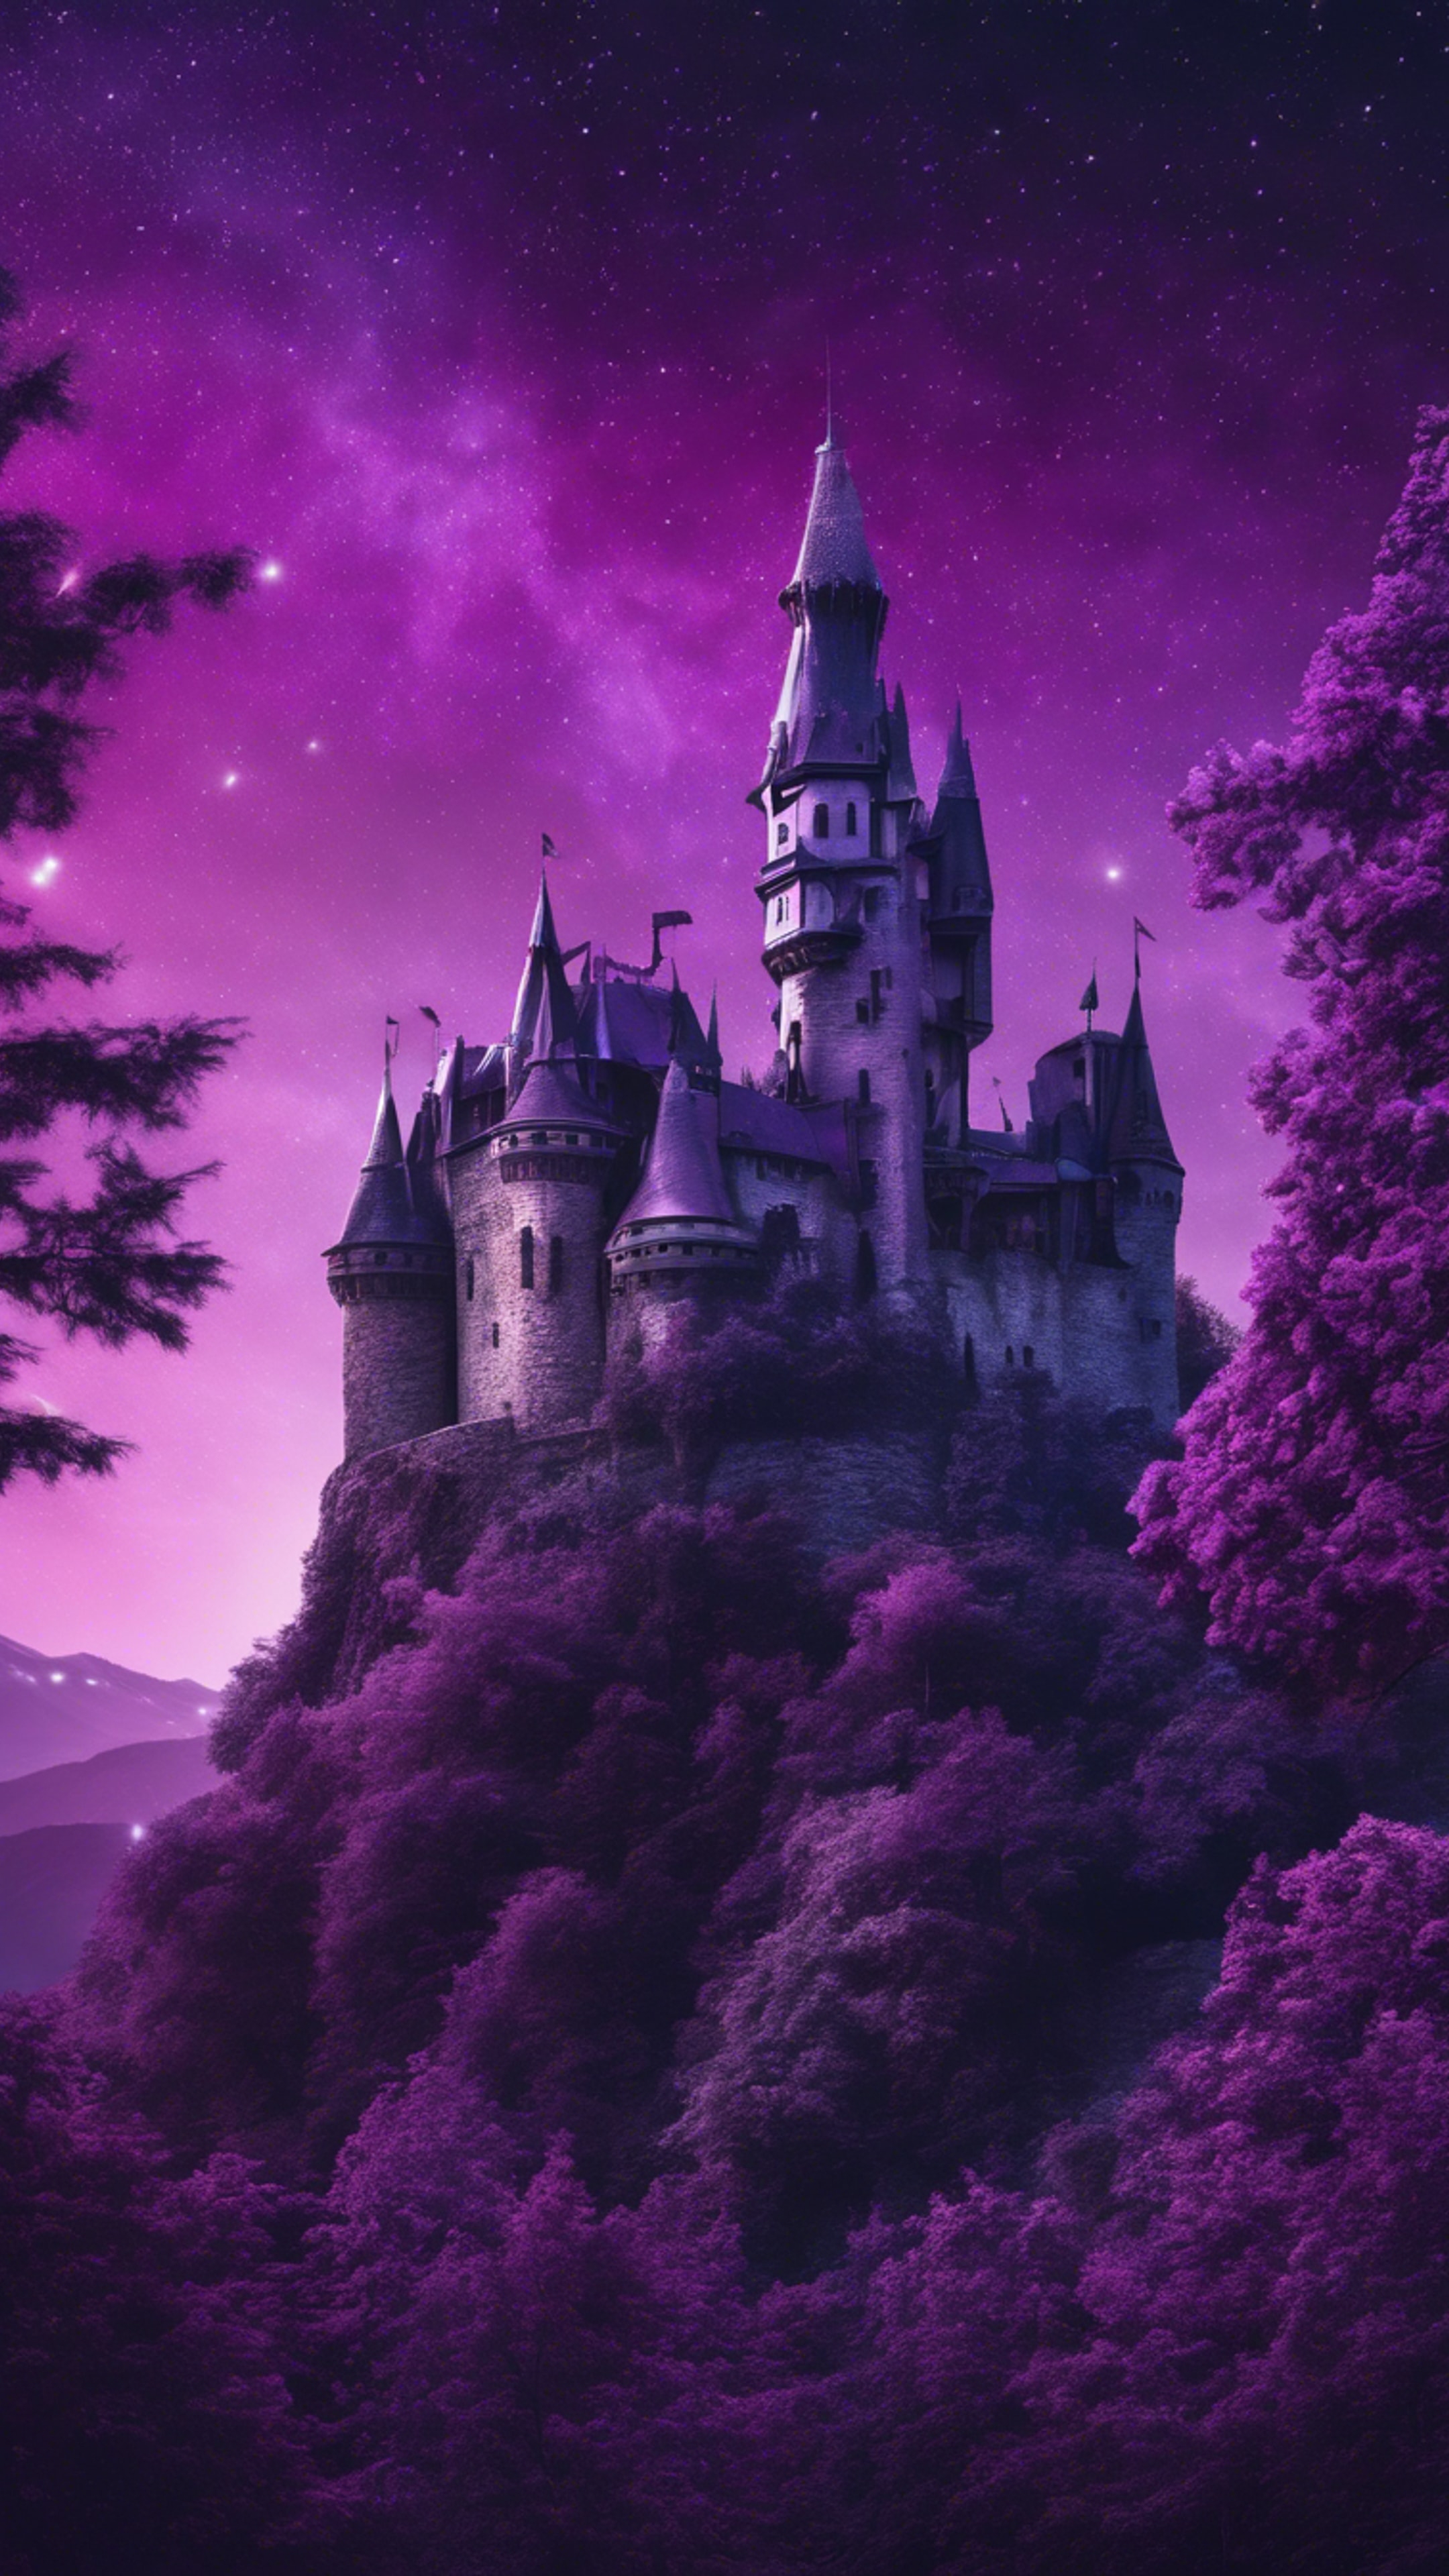 An imaginative collage including a deep purple night sky, a majestic purple castle, and a lush violet forest. Papel de parede[d69784f3cee744e79a0a]